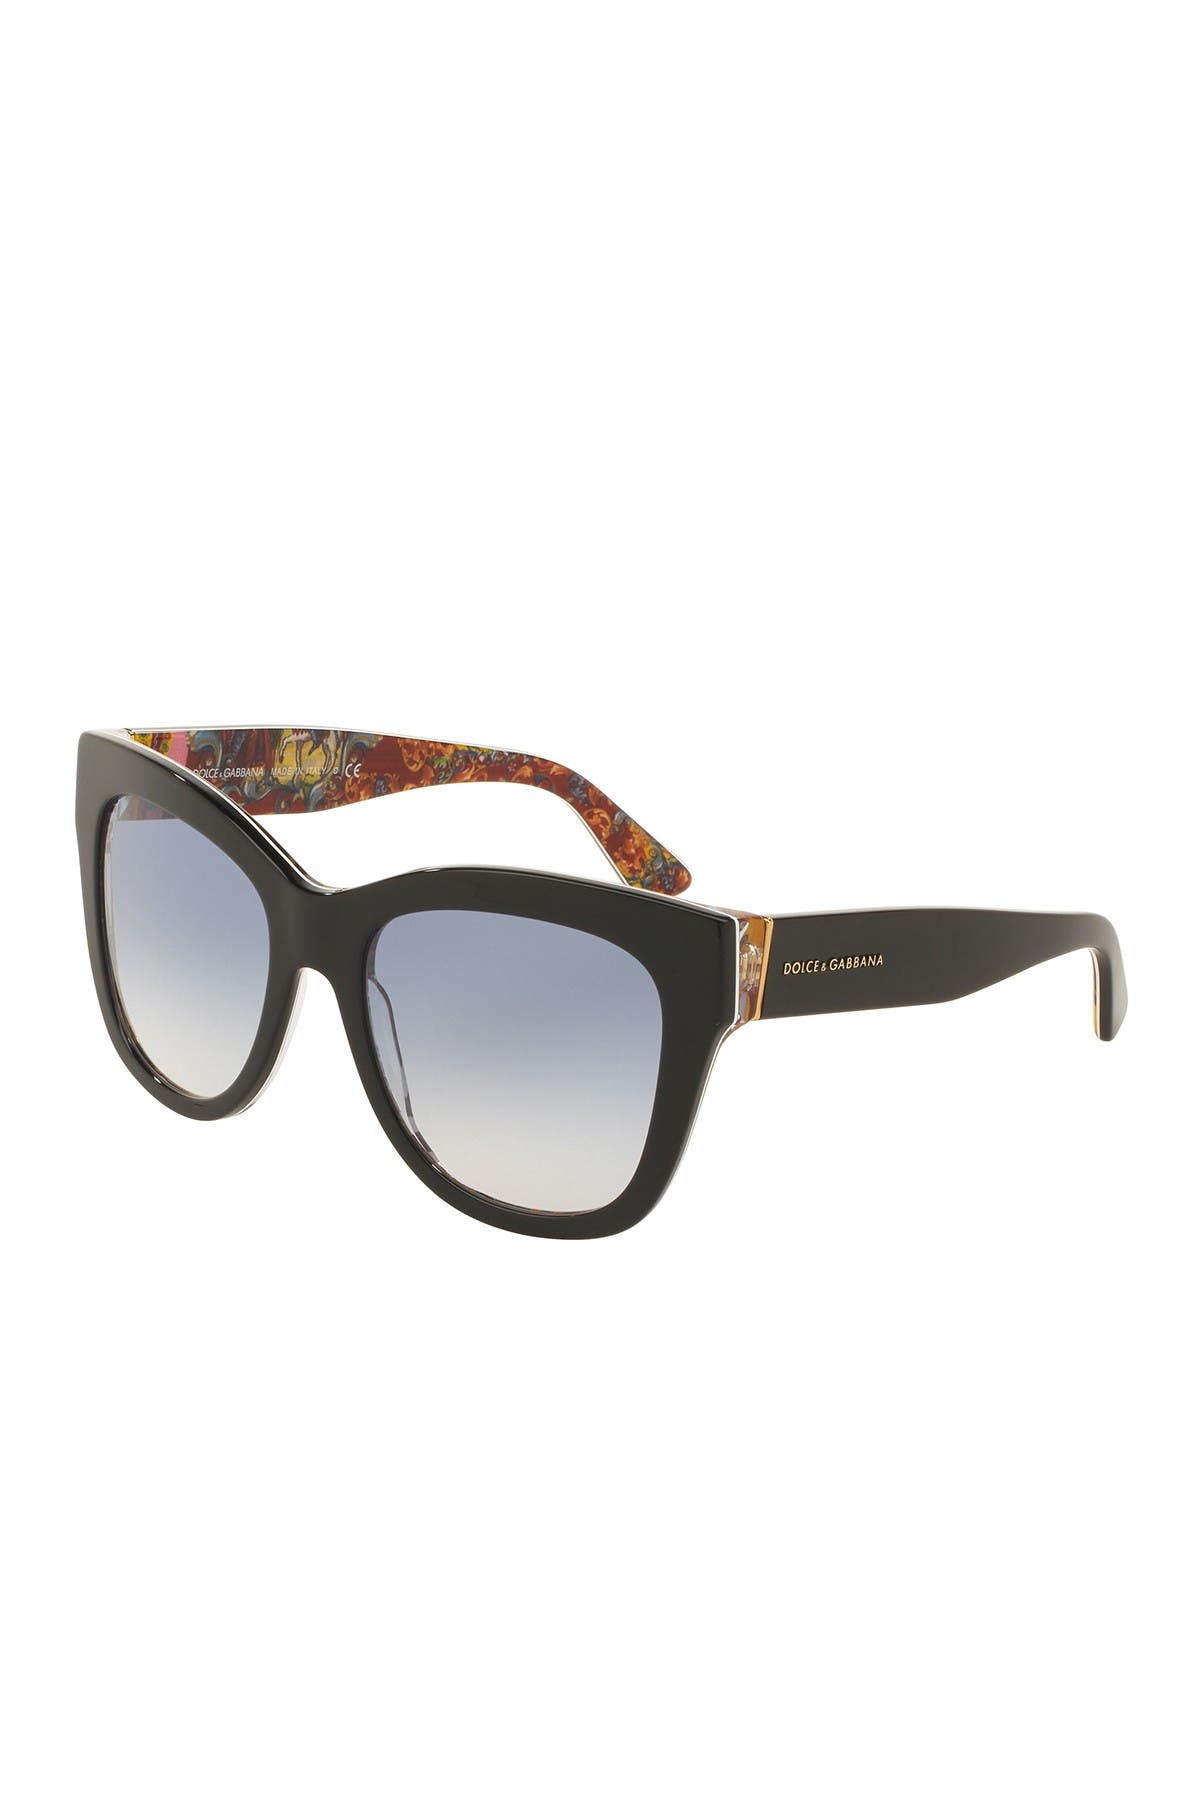 Dolce \u0026 Gabbana | 55mm Sunglasses 